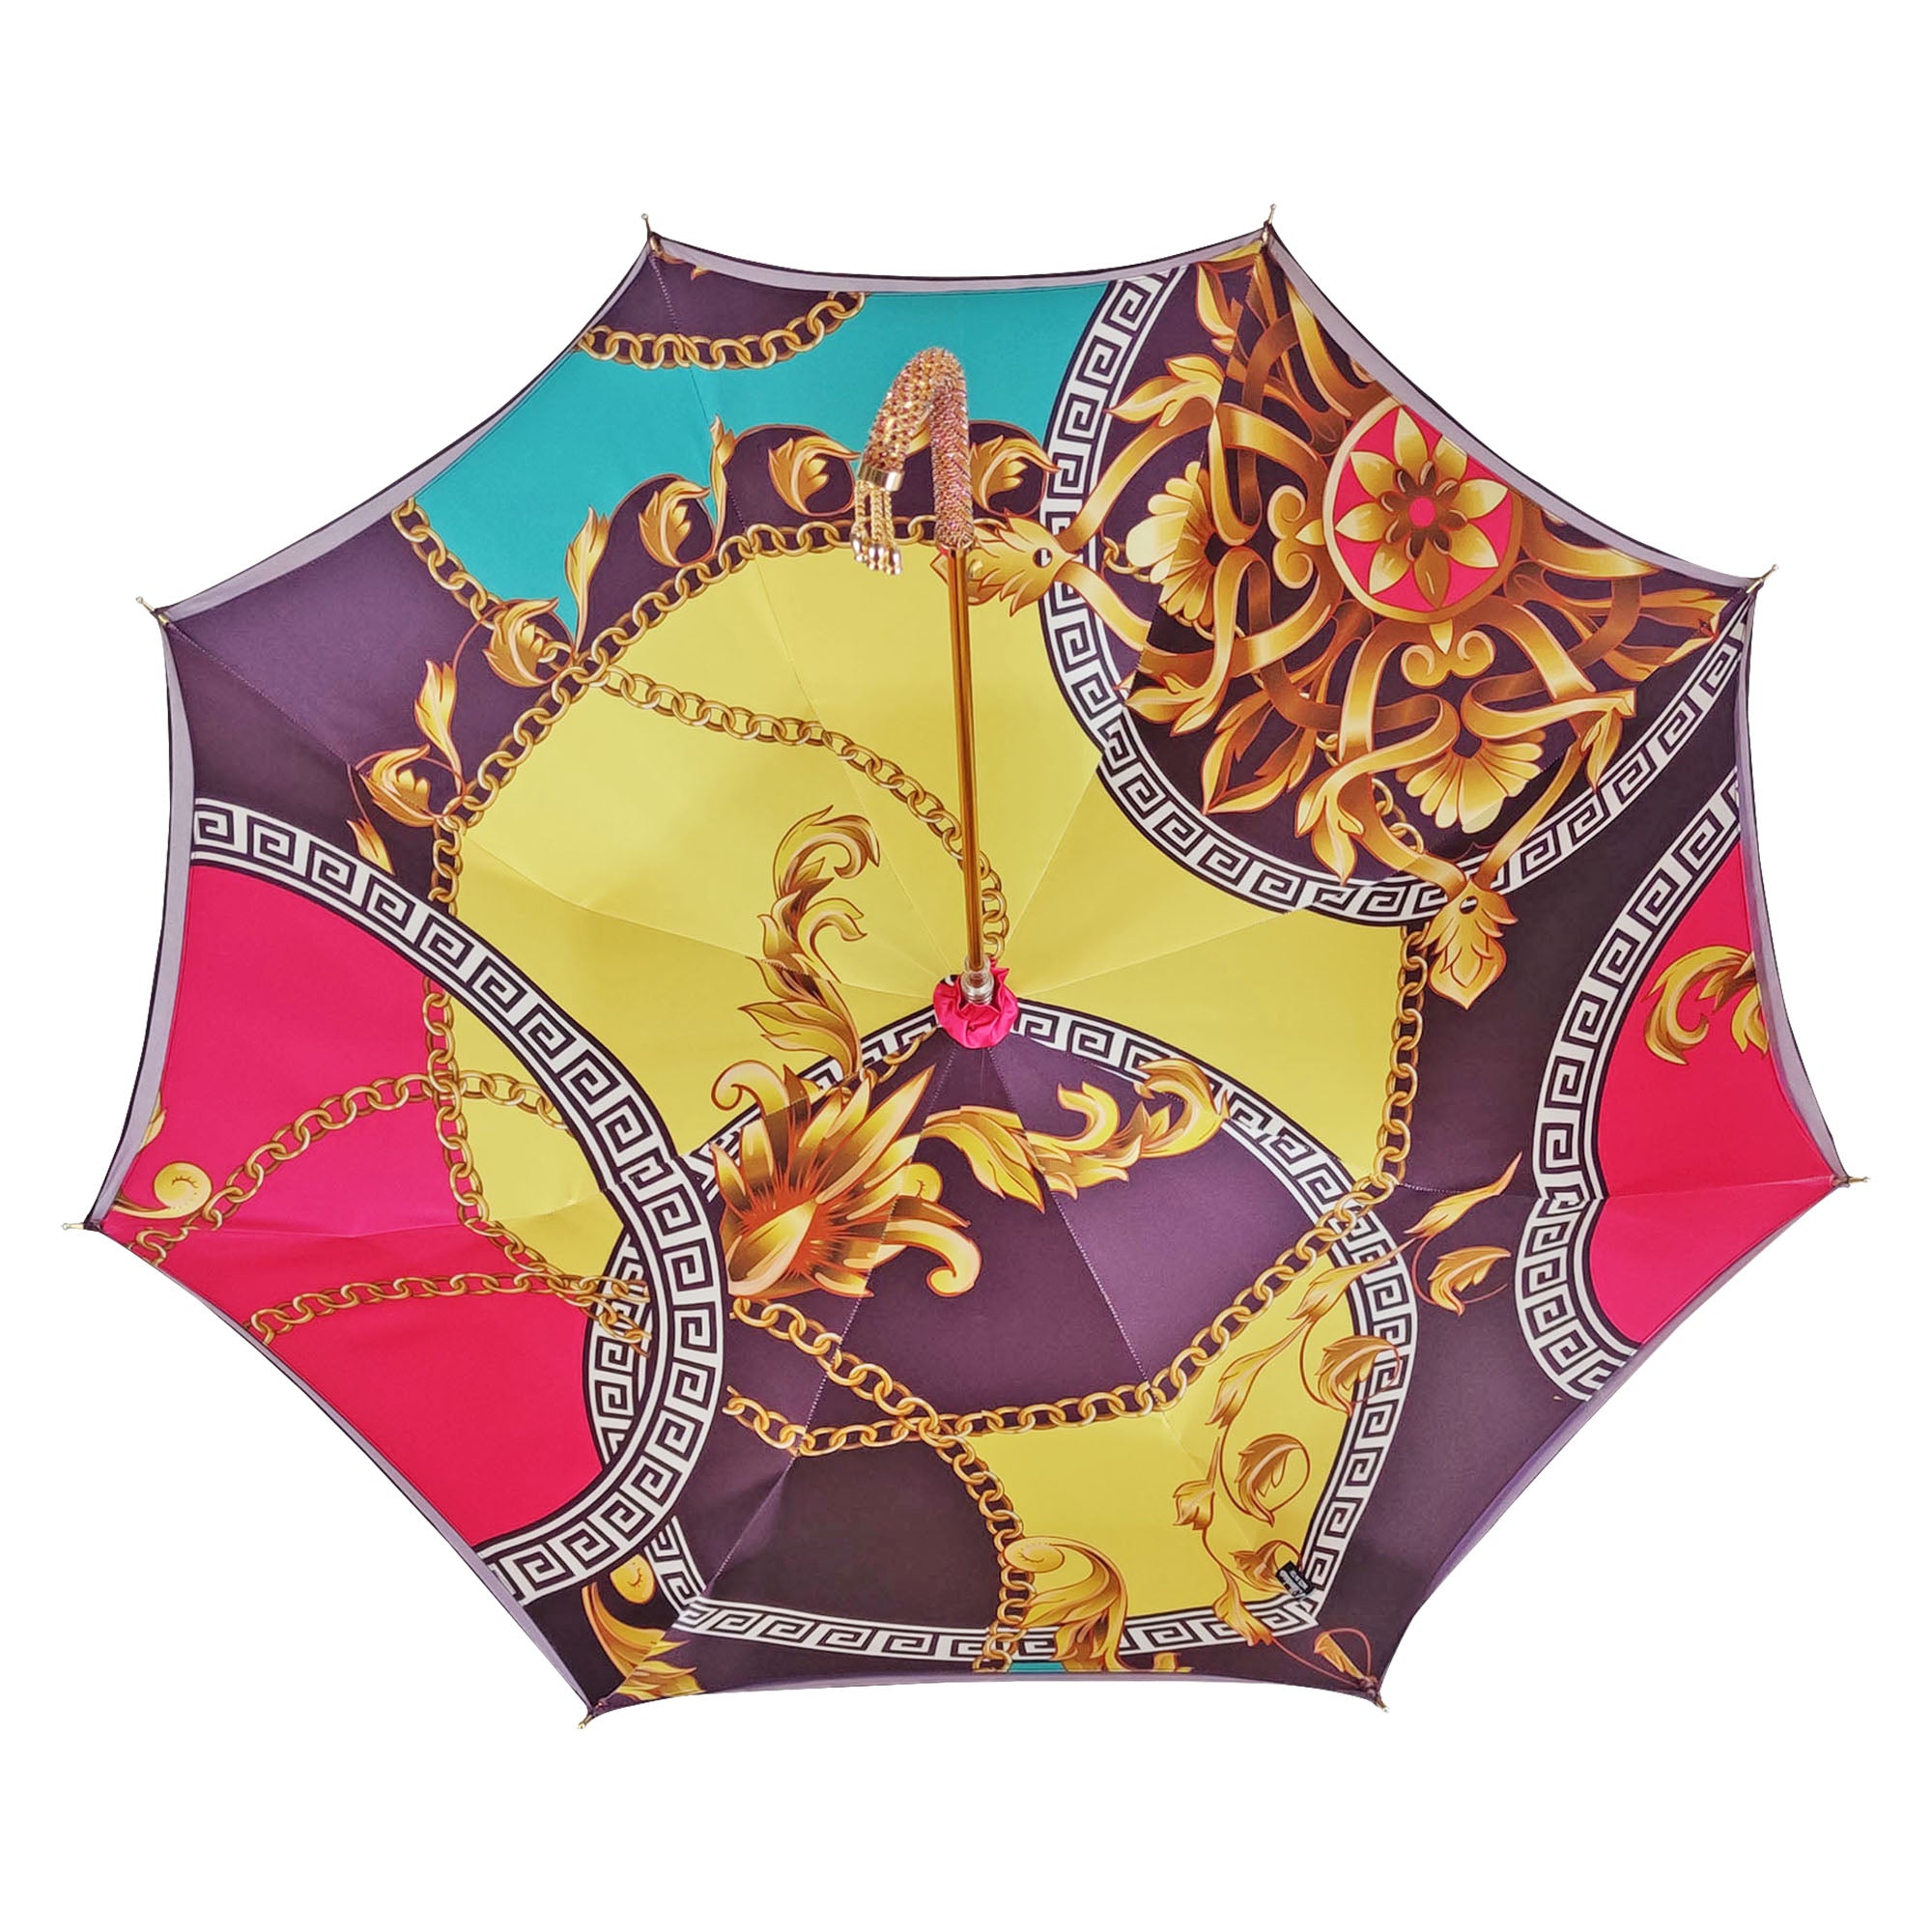 Beautiful umbrella with Amethyst crystals